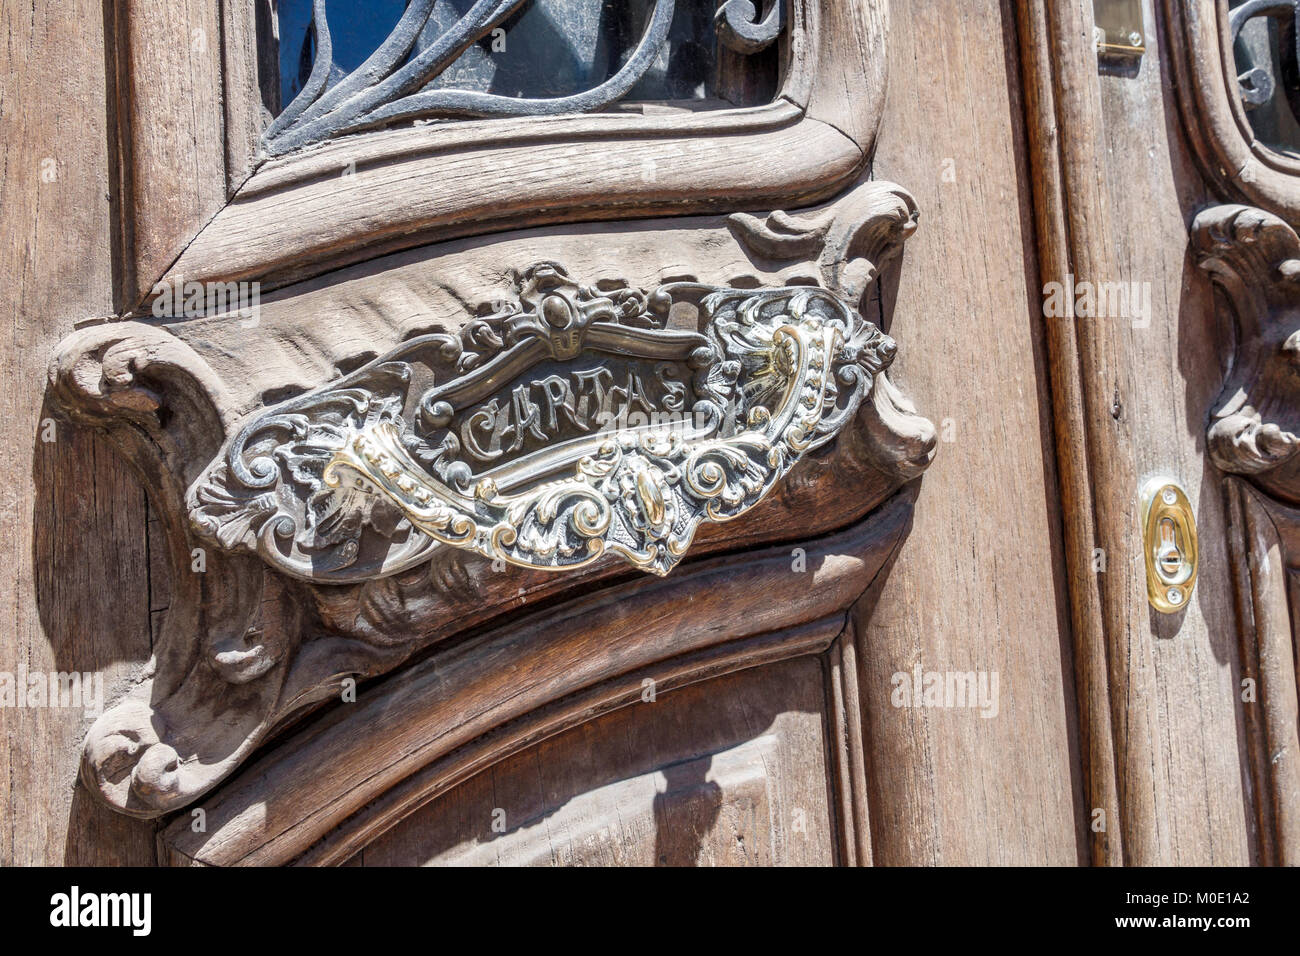 Buenos Aires Argentina,San Telmo,historic center,ornate letter drop,carved wood door,Hispanic ARG171122147 Stock Photo